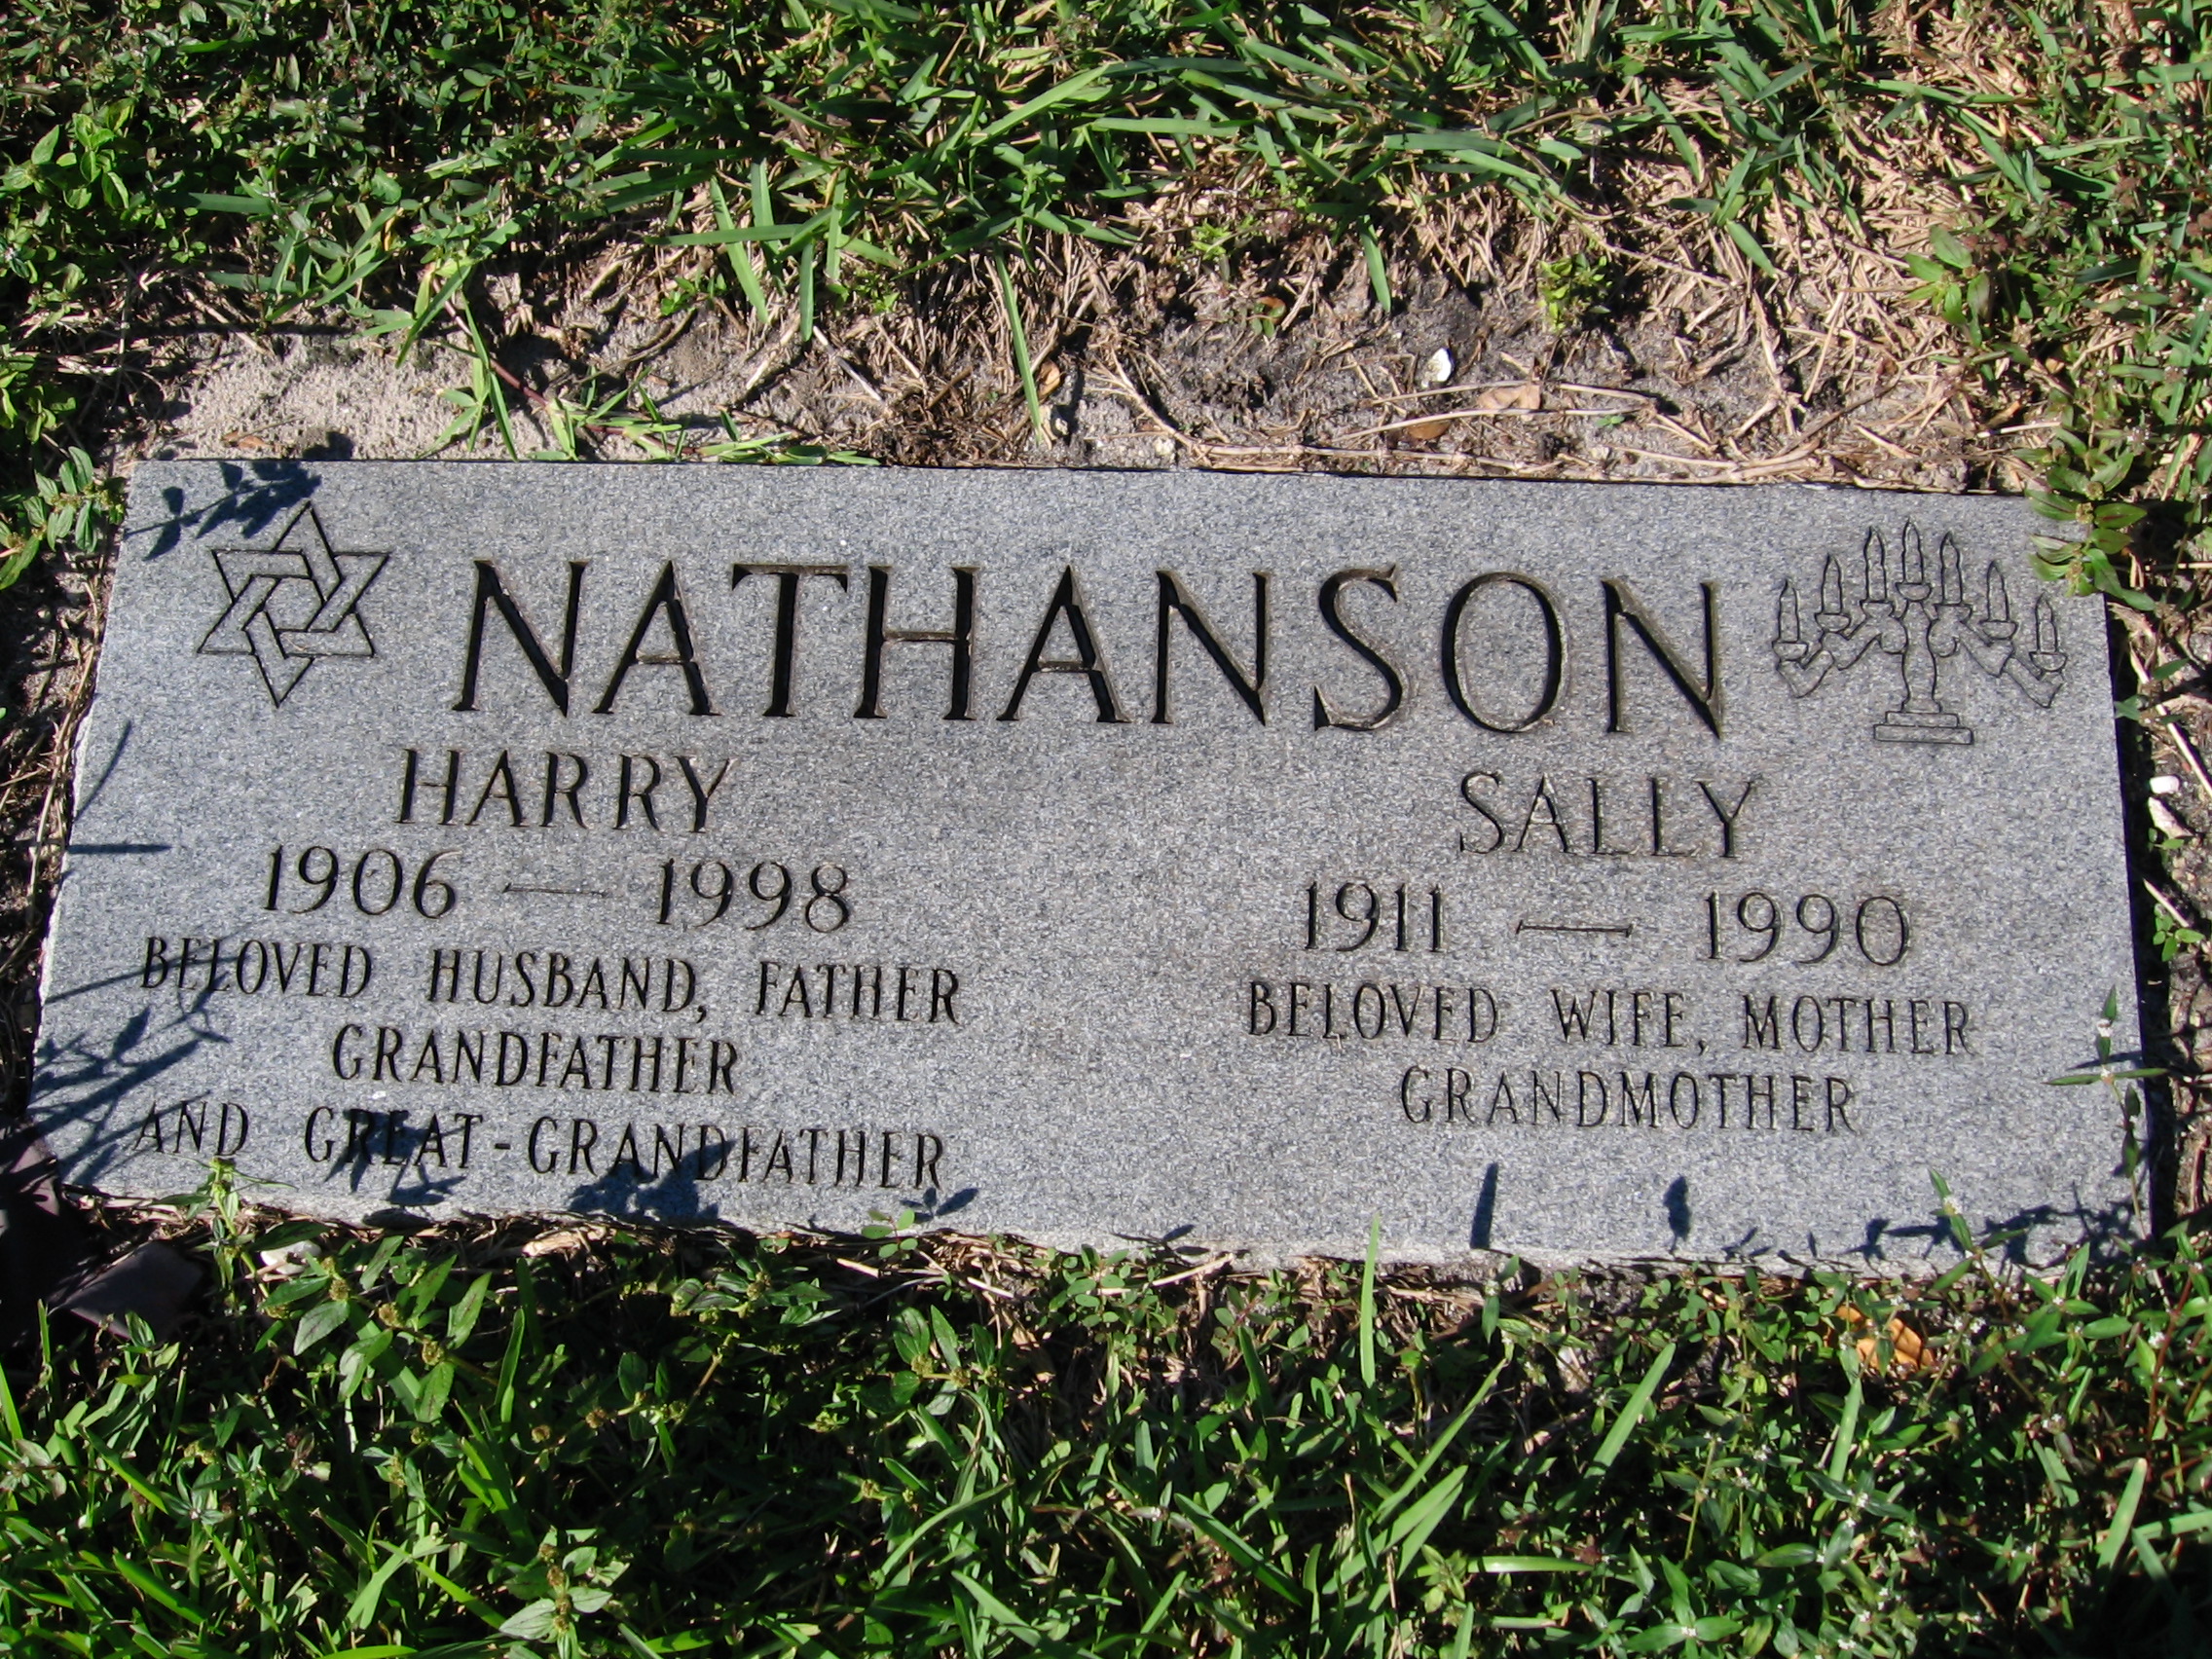 Harry Nathanson